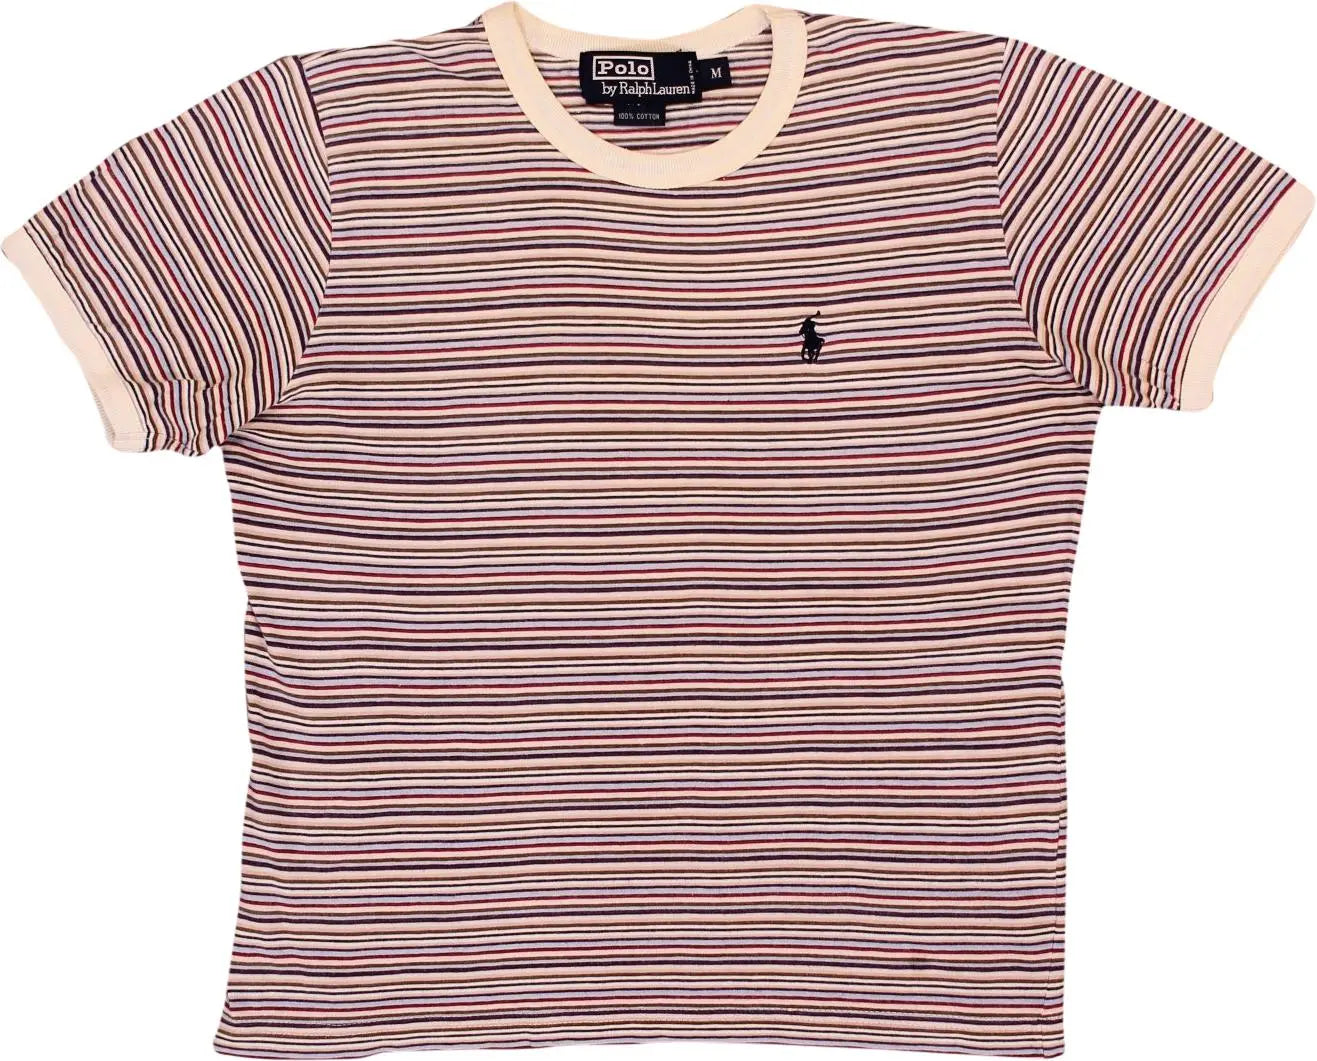 Ralph Lauren - Striped T-shirt by Ralph Lauren- ThriftTale.com - Vintage and second handclothing